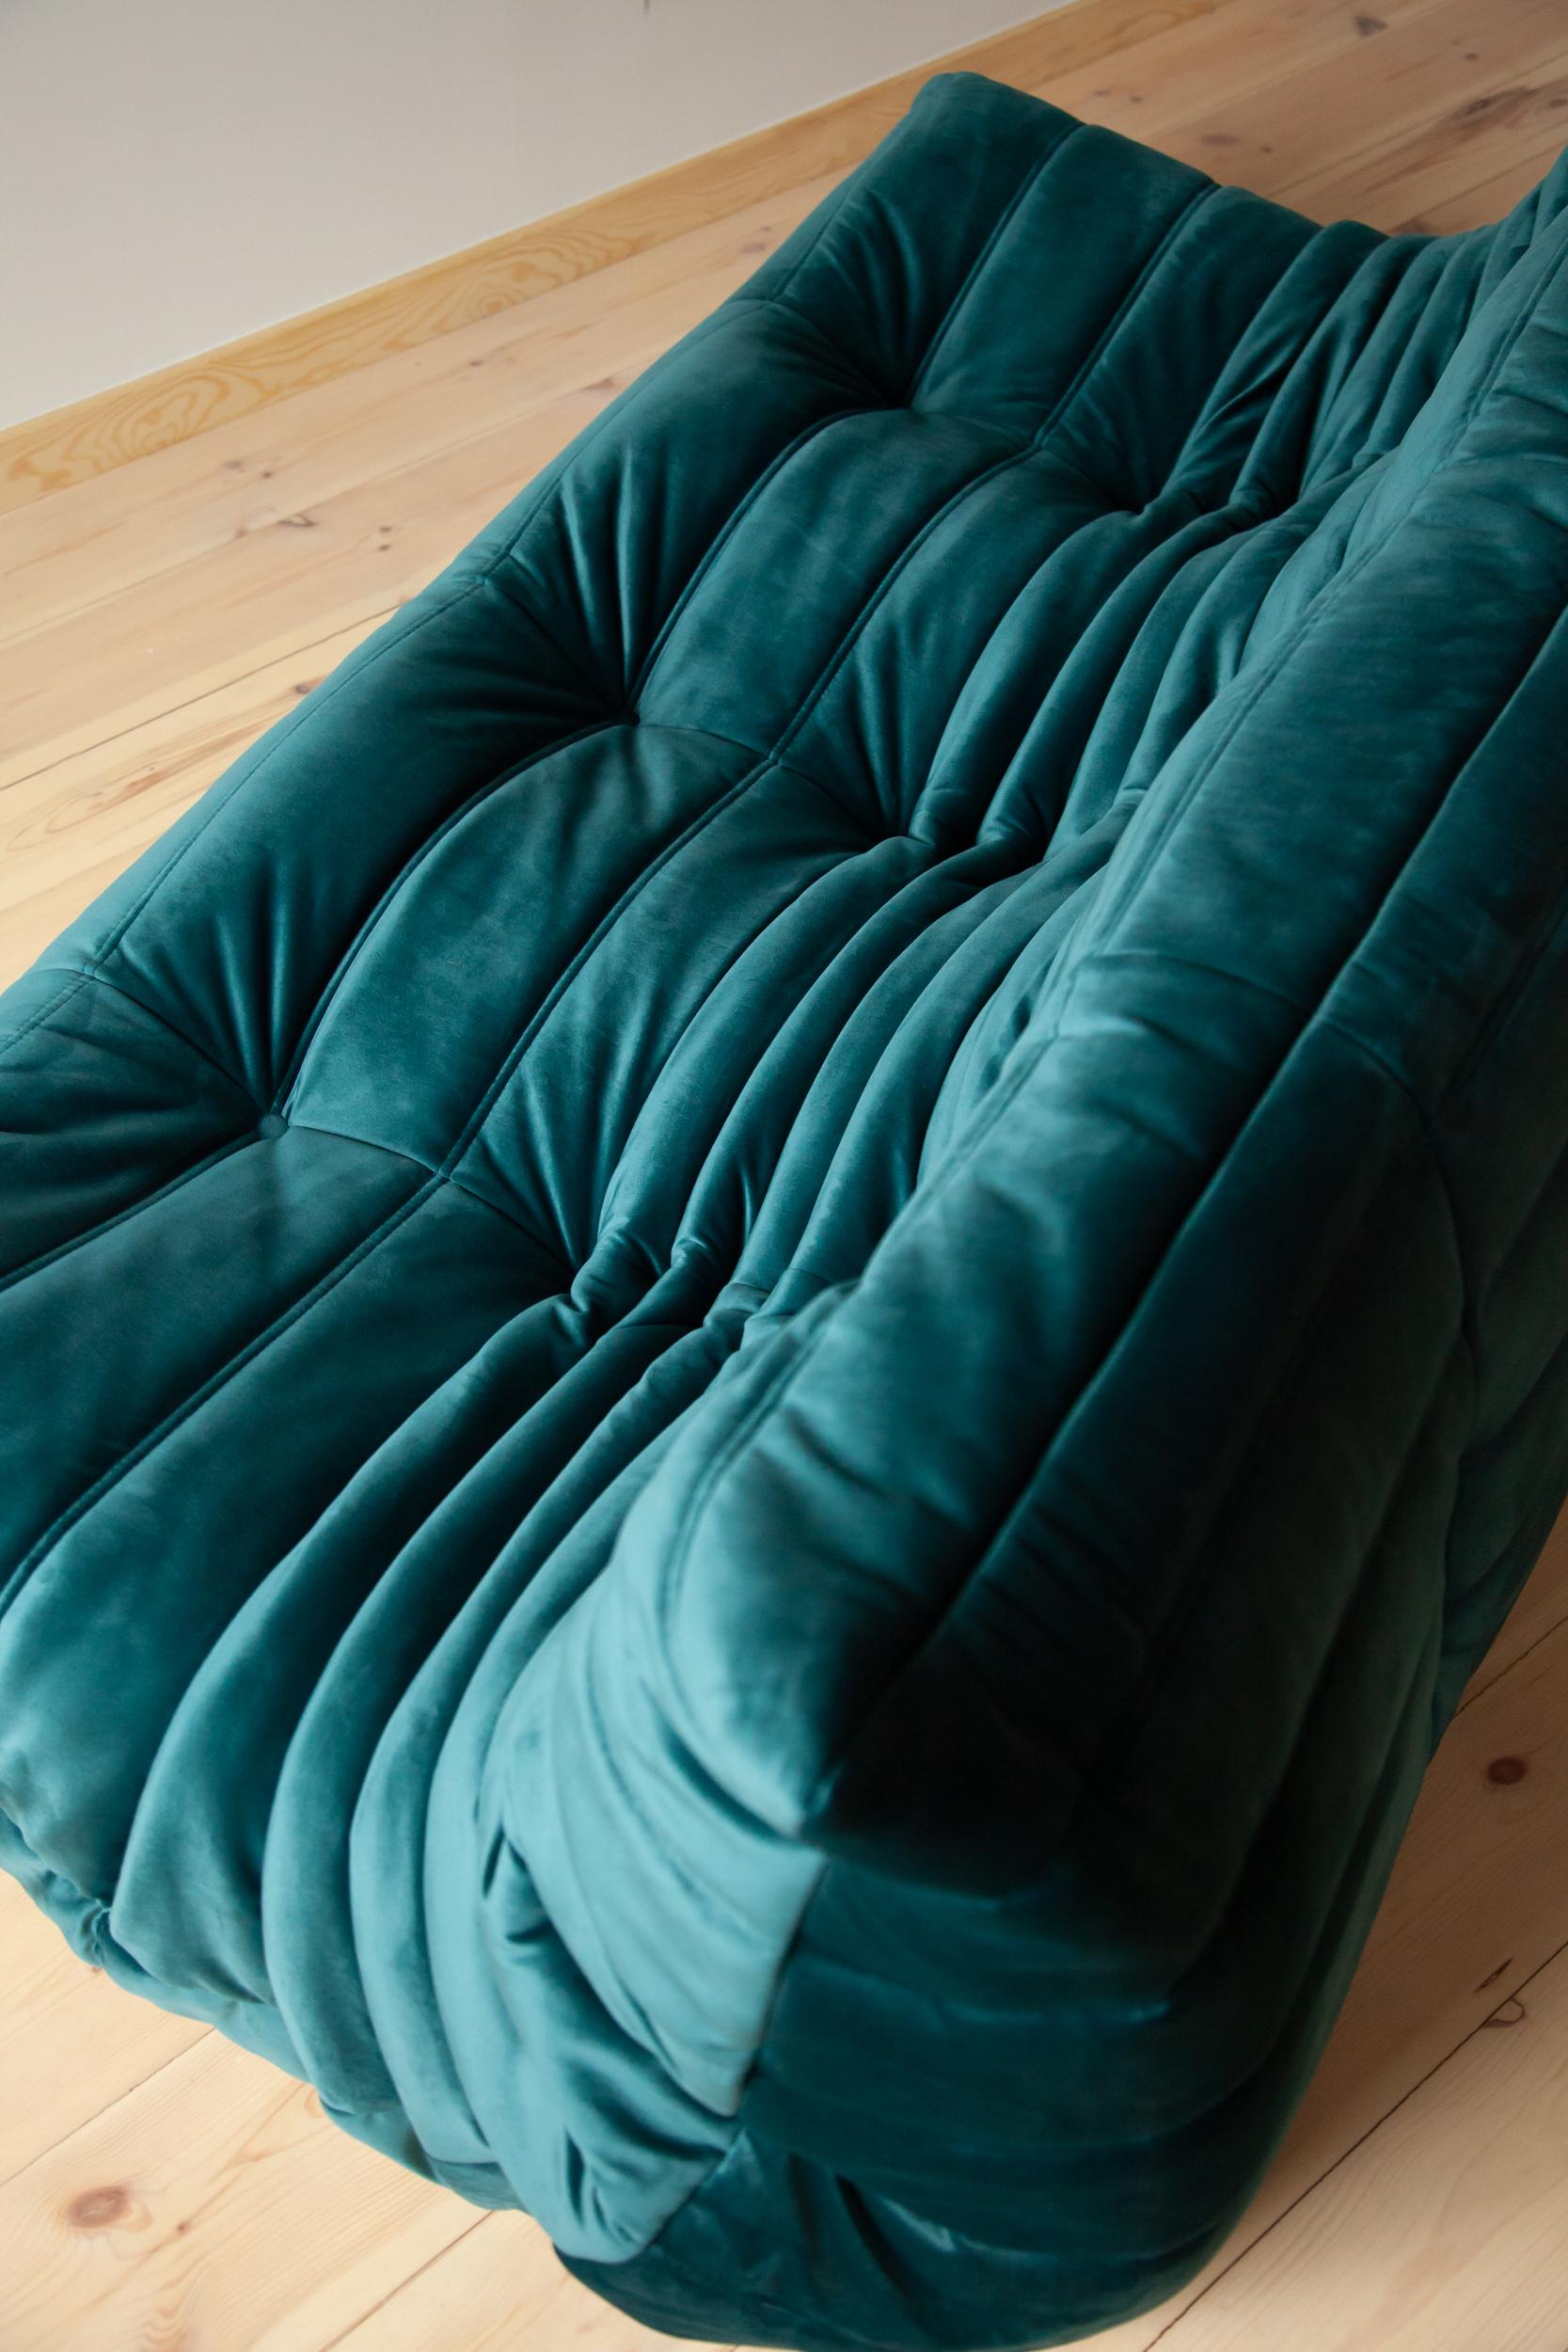 Togo 3-Seat Sofa in Blue-Green Velvet by Michel Ducaroy for Ligne Roset In Excellent Condition For Sale In Berlin, DE